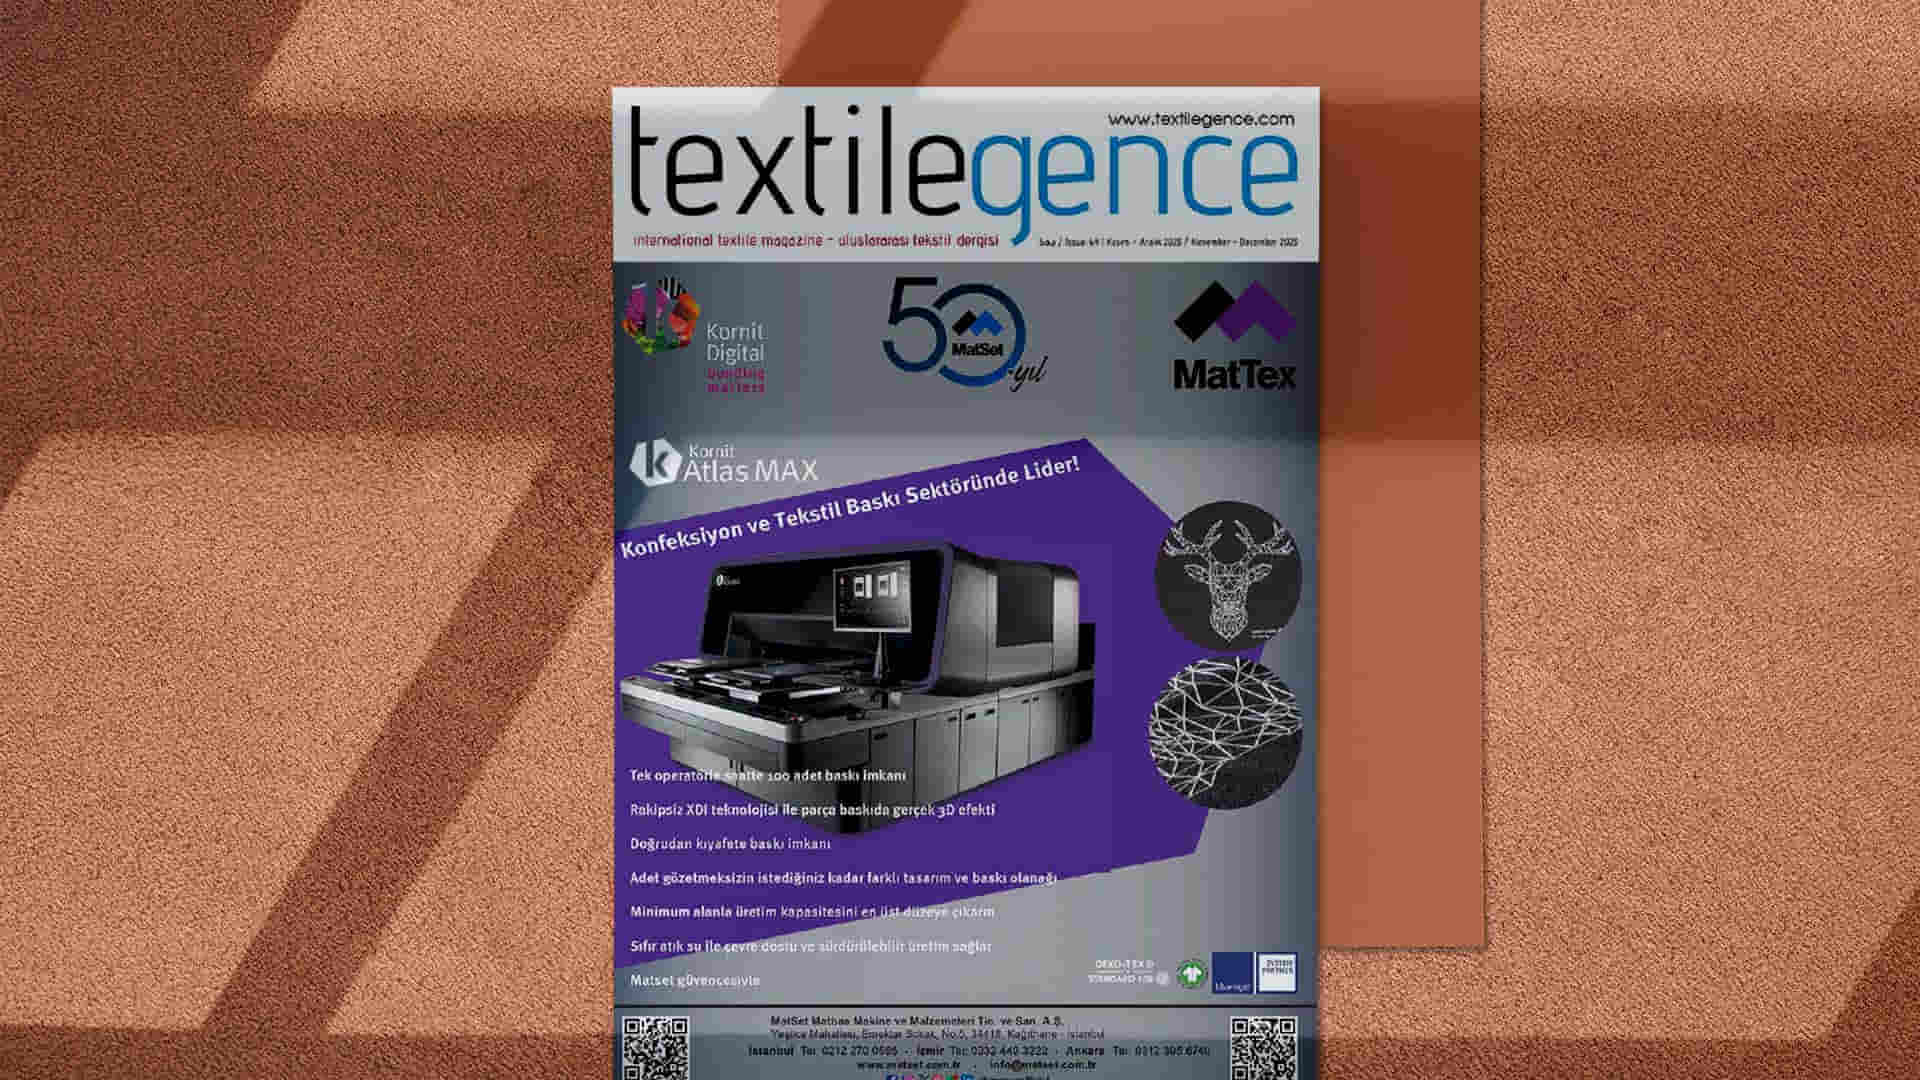 Textilegence November December 2023 issue has been published Image Source: Freepik